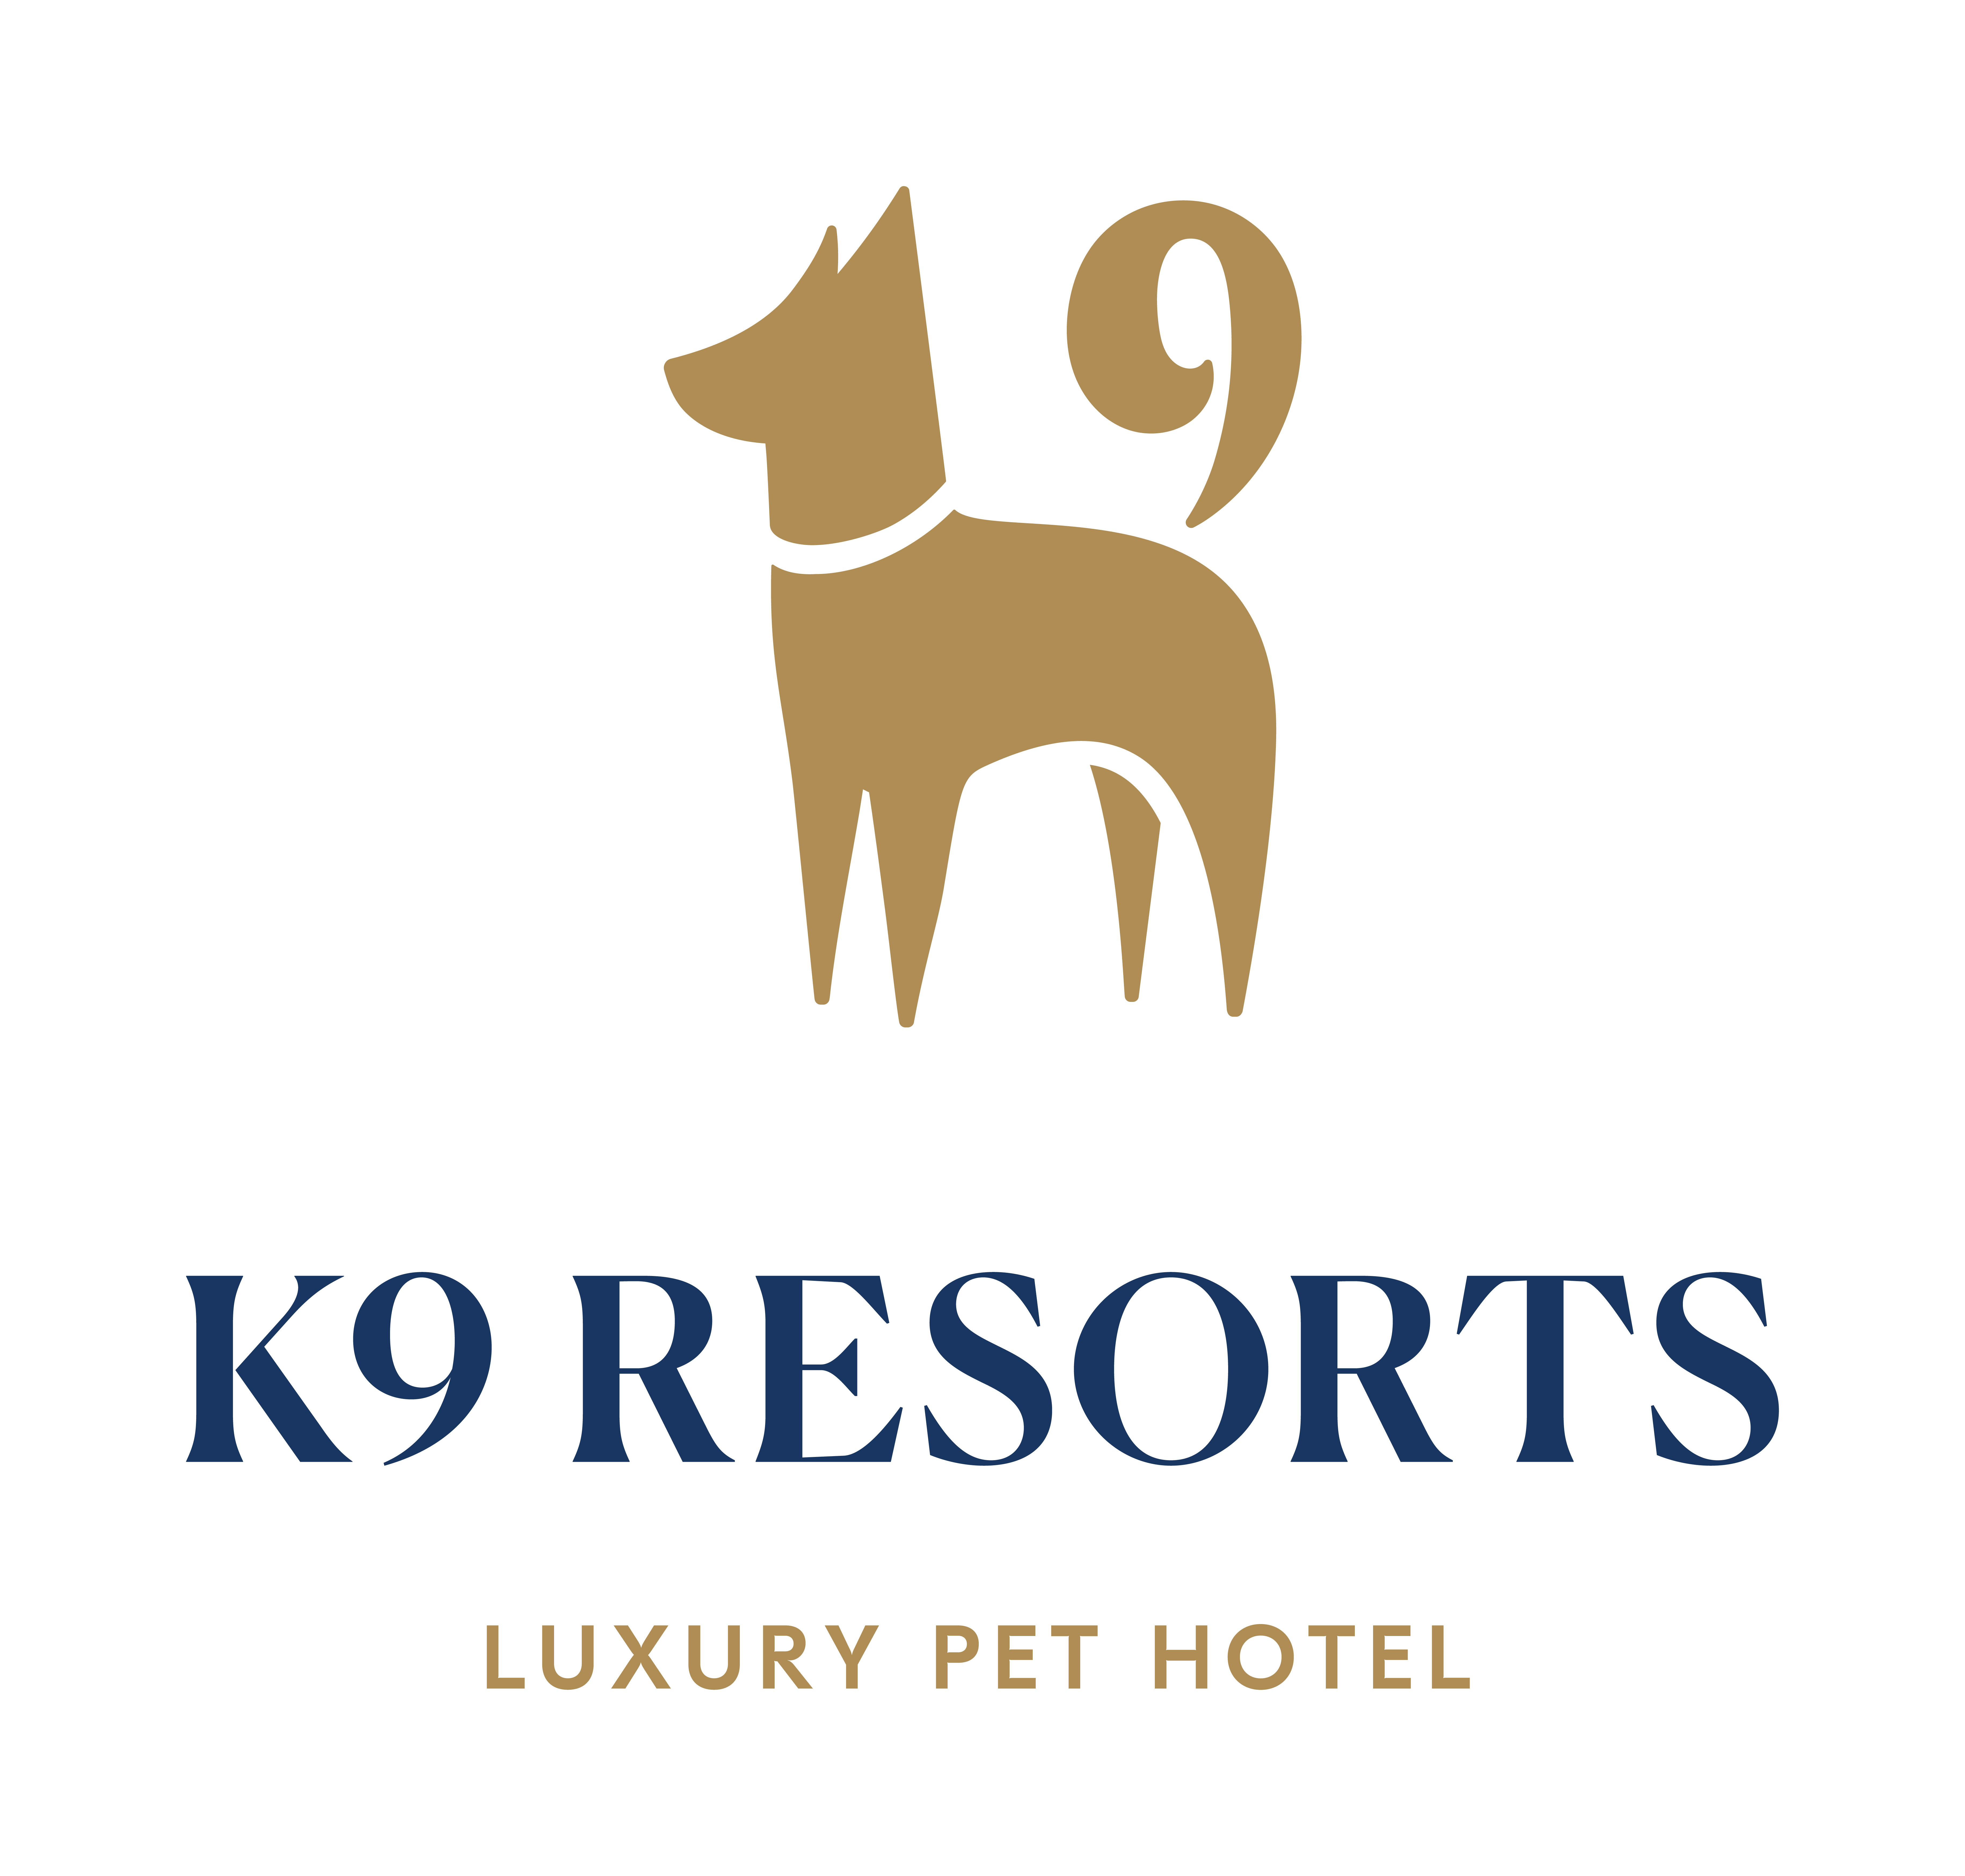 K9resorts vertical logo tagline luxury bluegold rgb